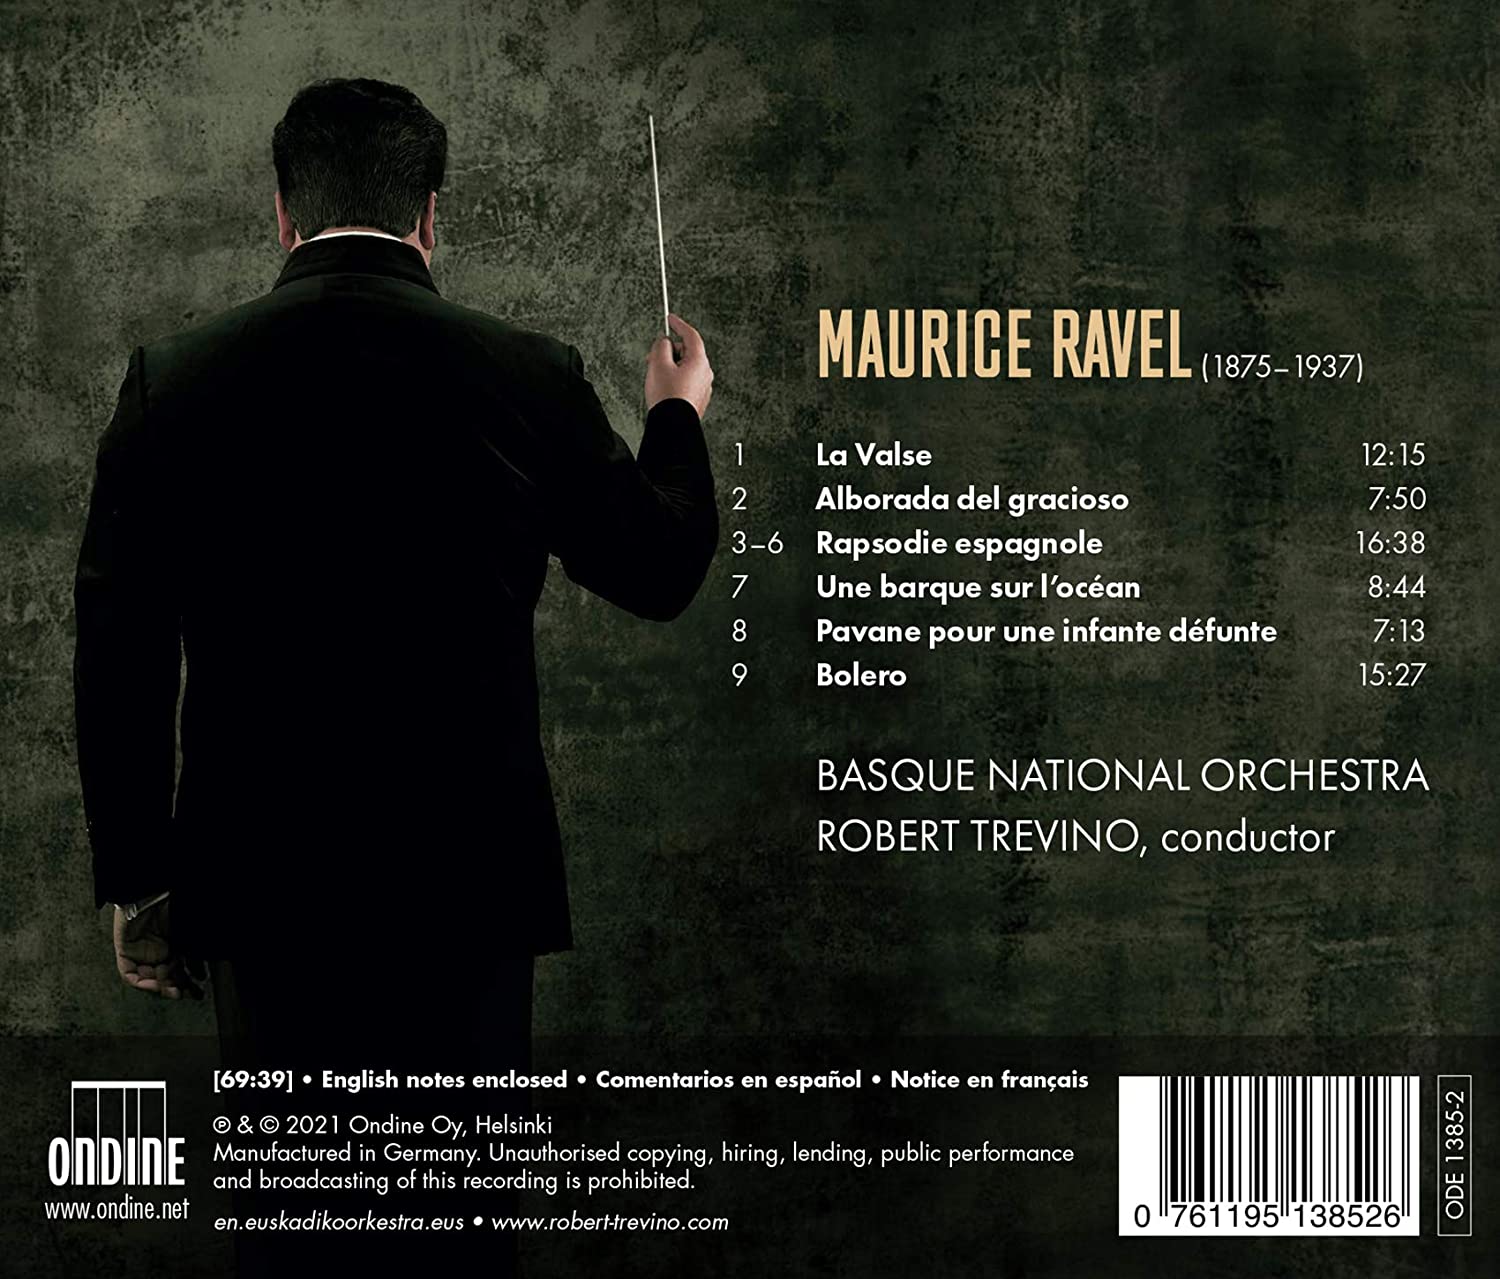 Robert Trevino 라벨: 볼레로, 라 발스, 스페인 광시곡, 어릿광대의 아침 인사, 죽은 왕녀를 위한 파반느 외 (Ravel: Bolero, La Valse, Rapsodie espagnole, Alborada del gracioso, Pavane) 